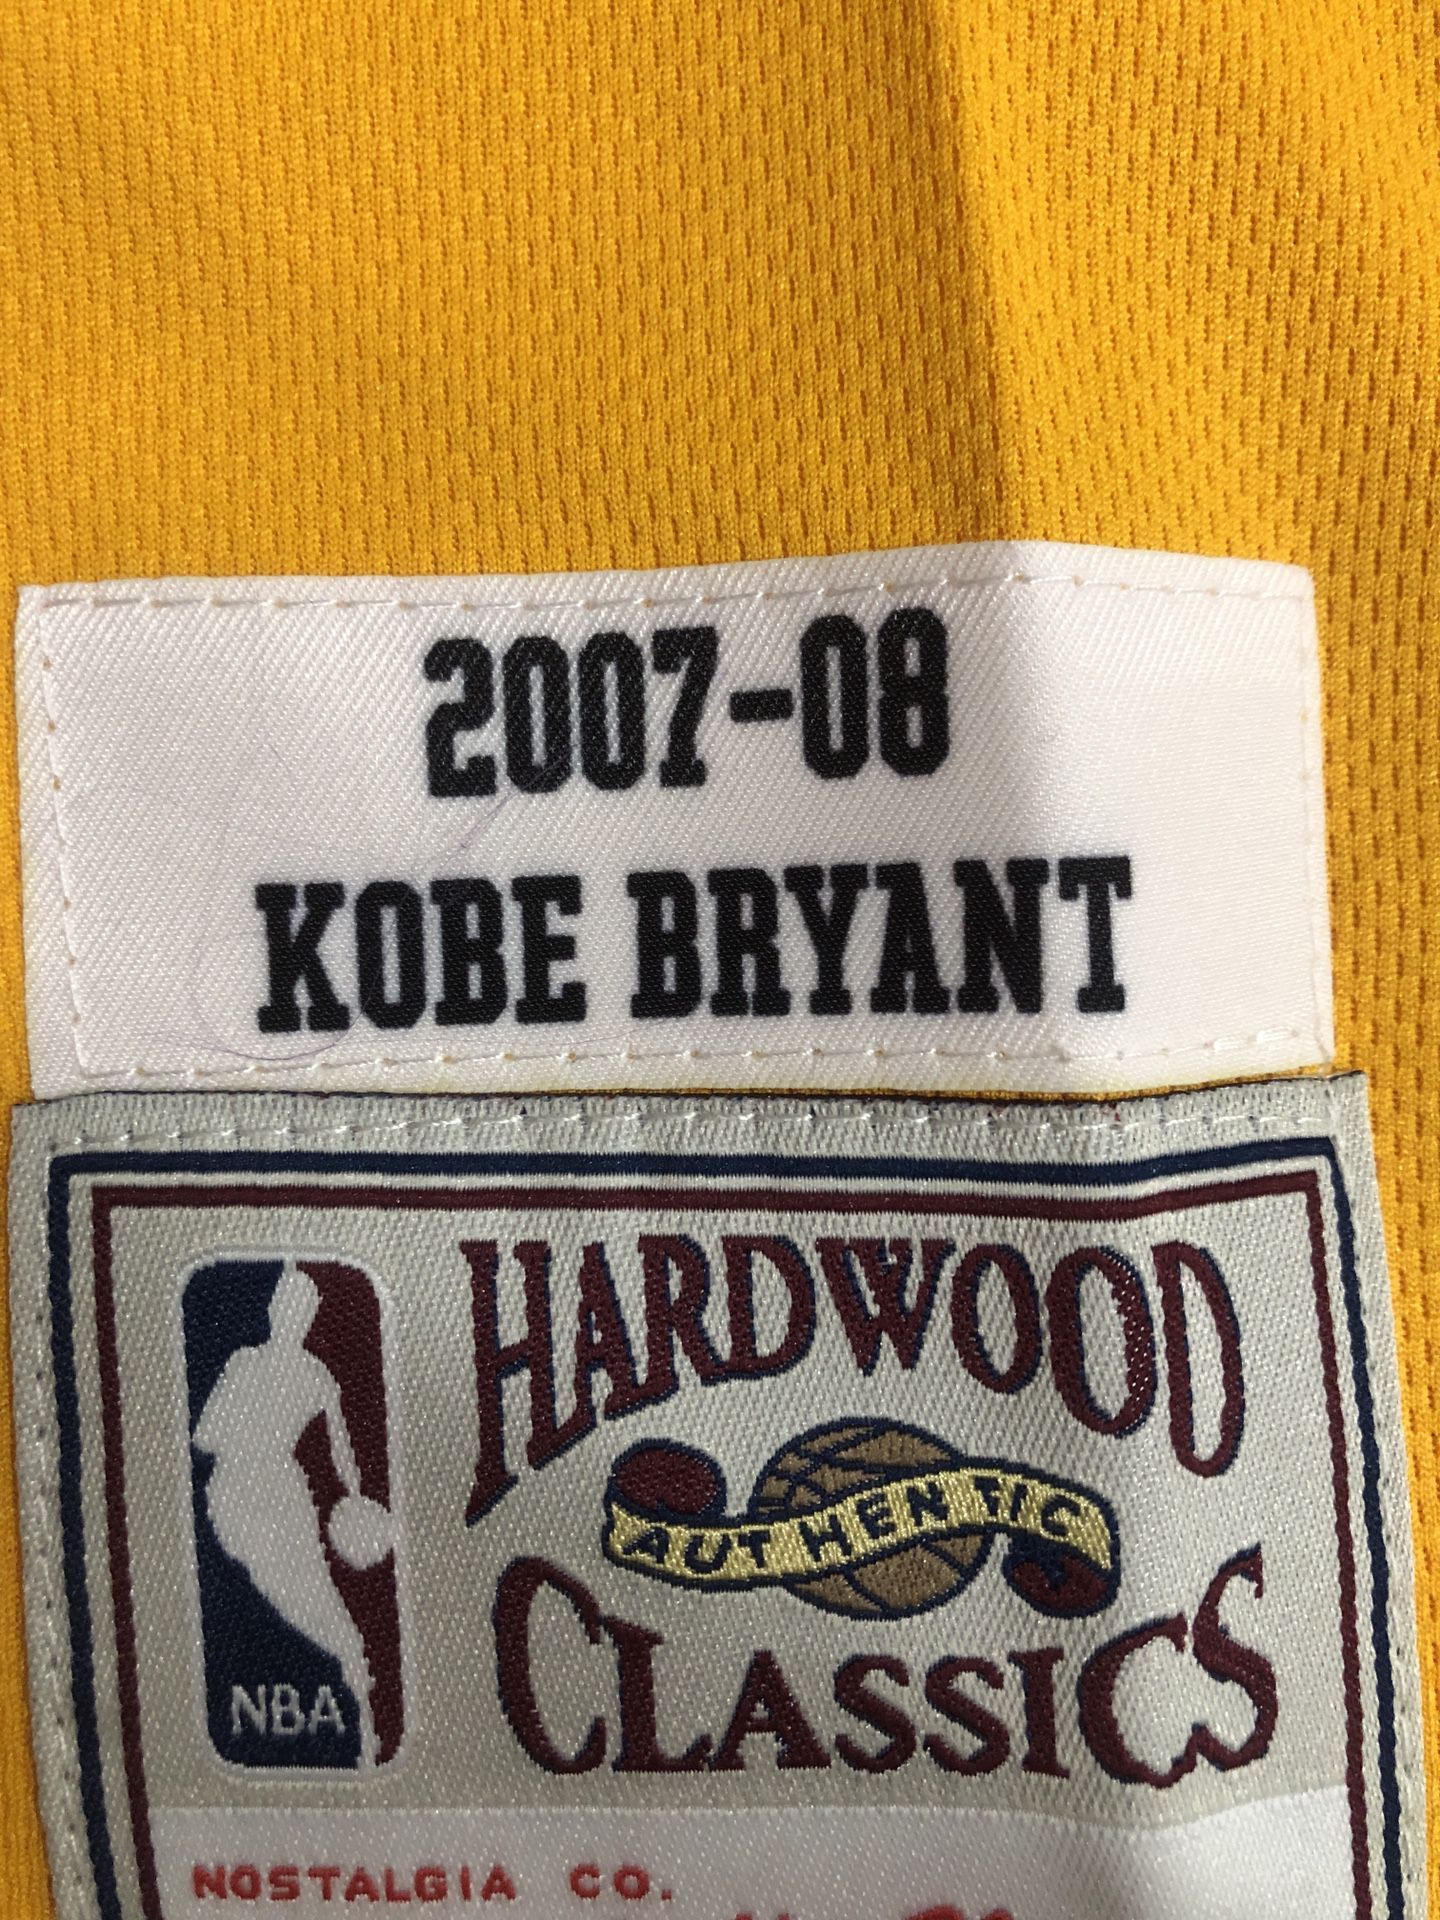 Kobe Bryant Vintage 8 Jersey for Sale in Glassport, PA - OfferUp